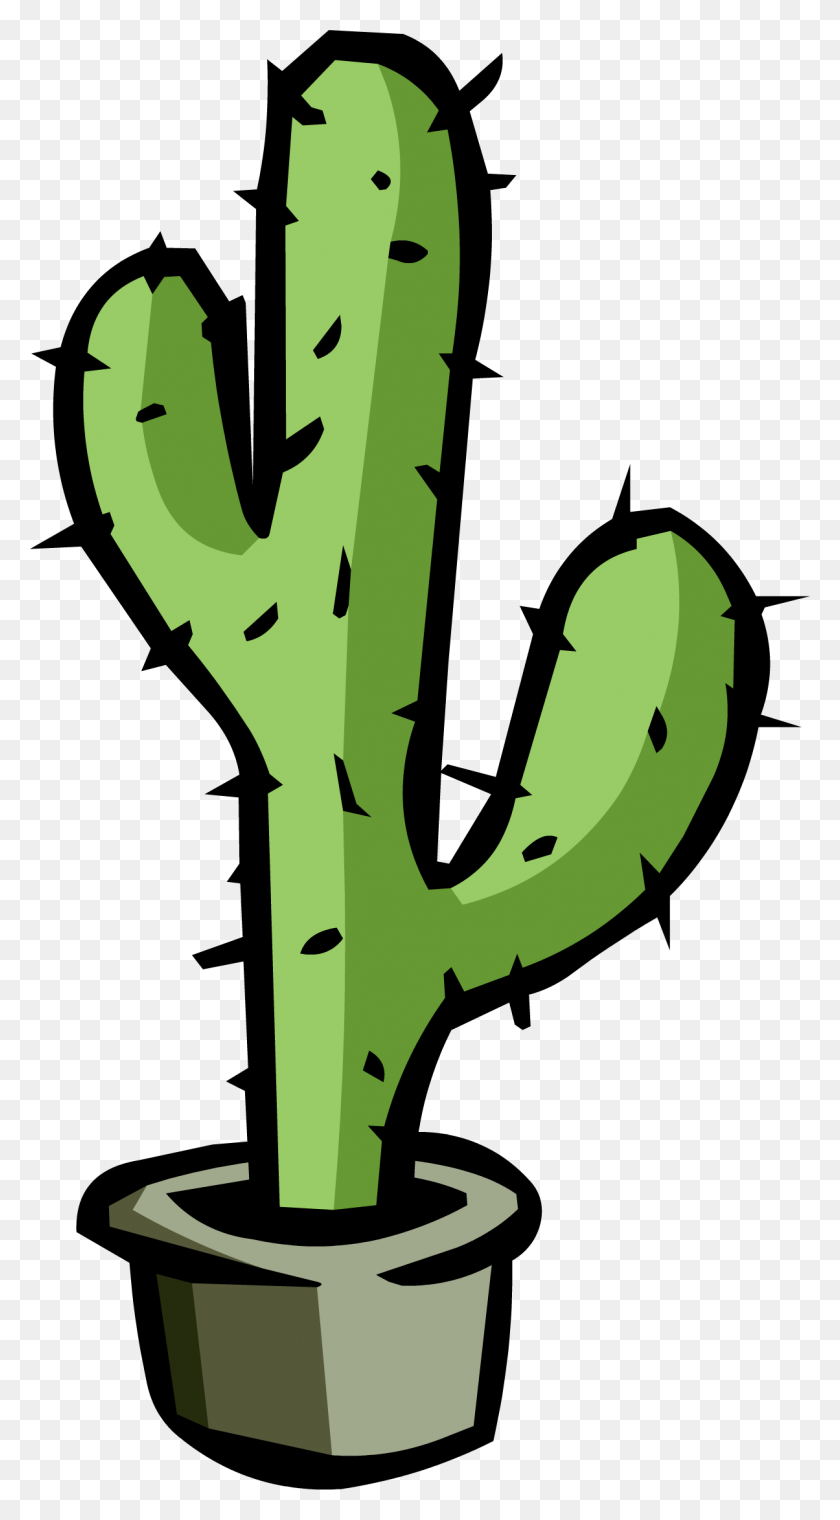 Download Cactus Clipart Cactus Drawing Cactus Flower Clipart Free - Cactus Clipart